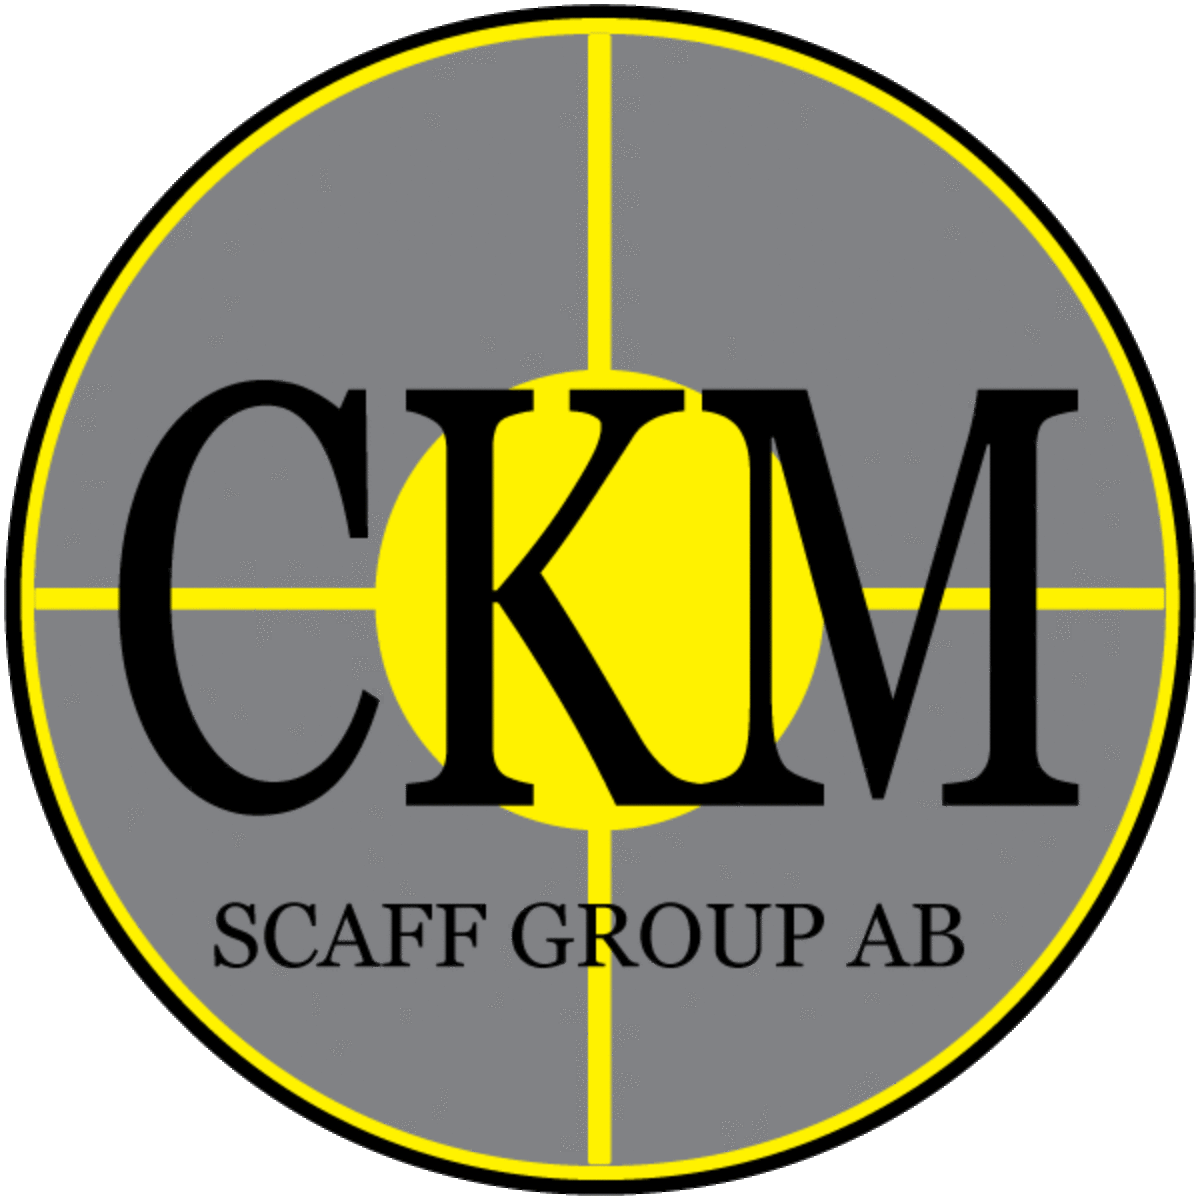 CKM Scaffgroup AB